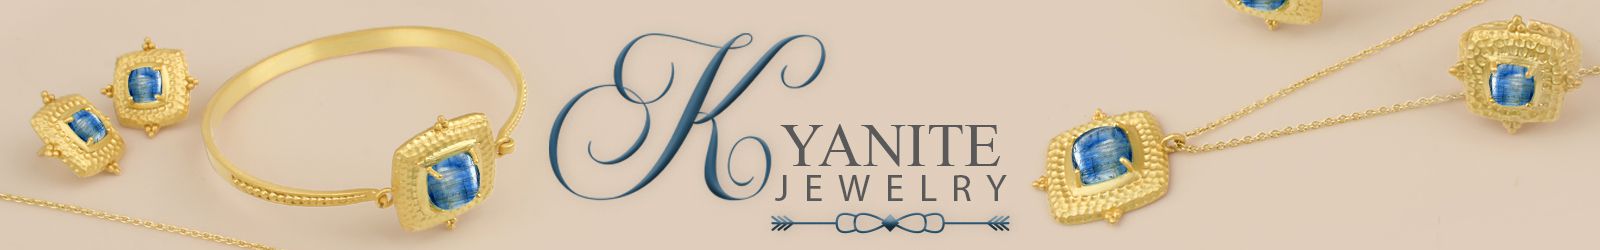 Silver Kyanite Jewelry Wholesale Supplier